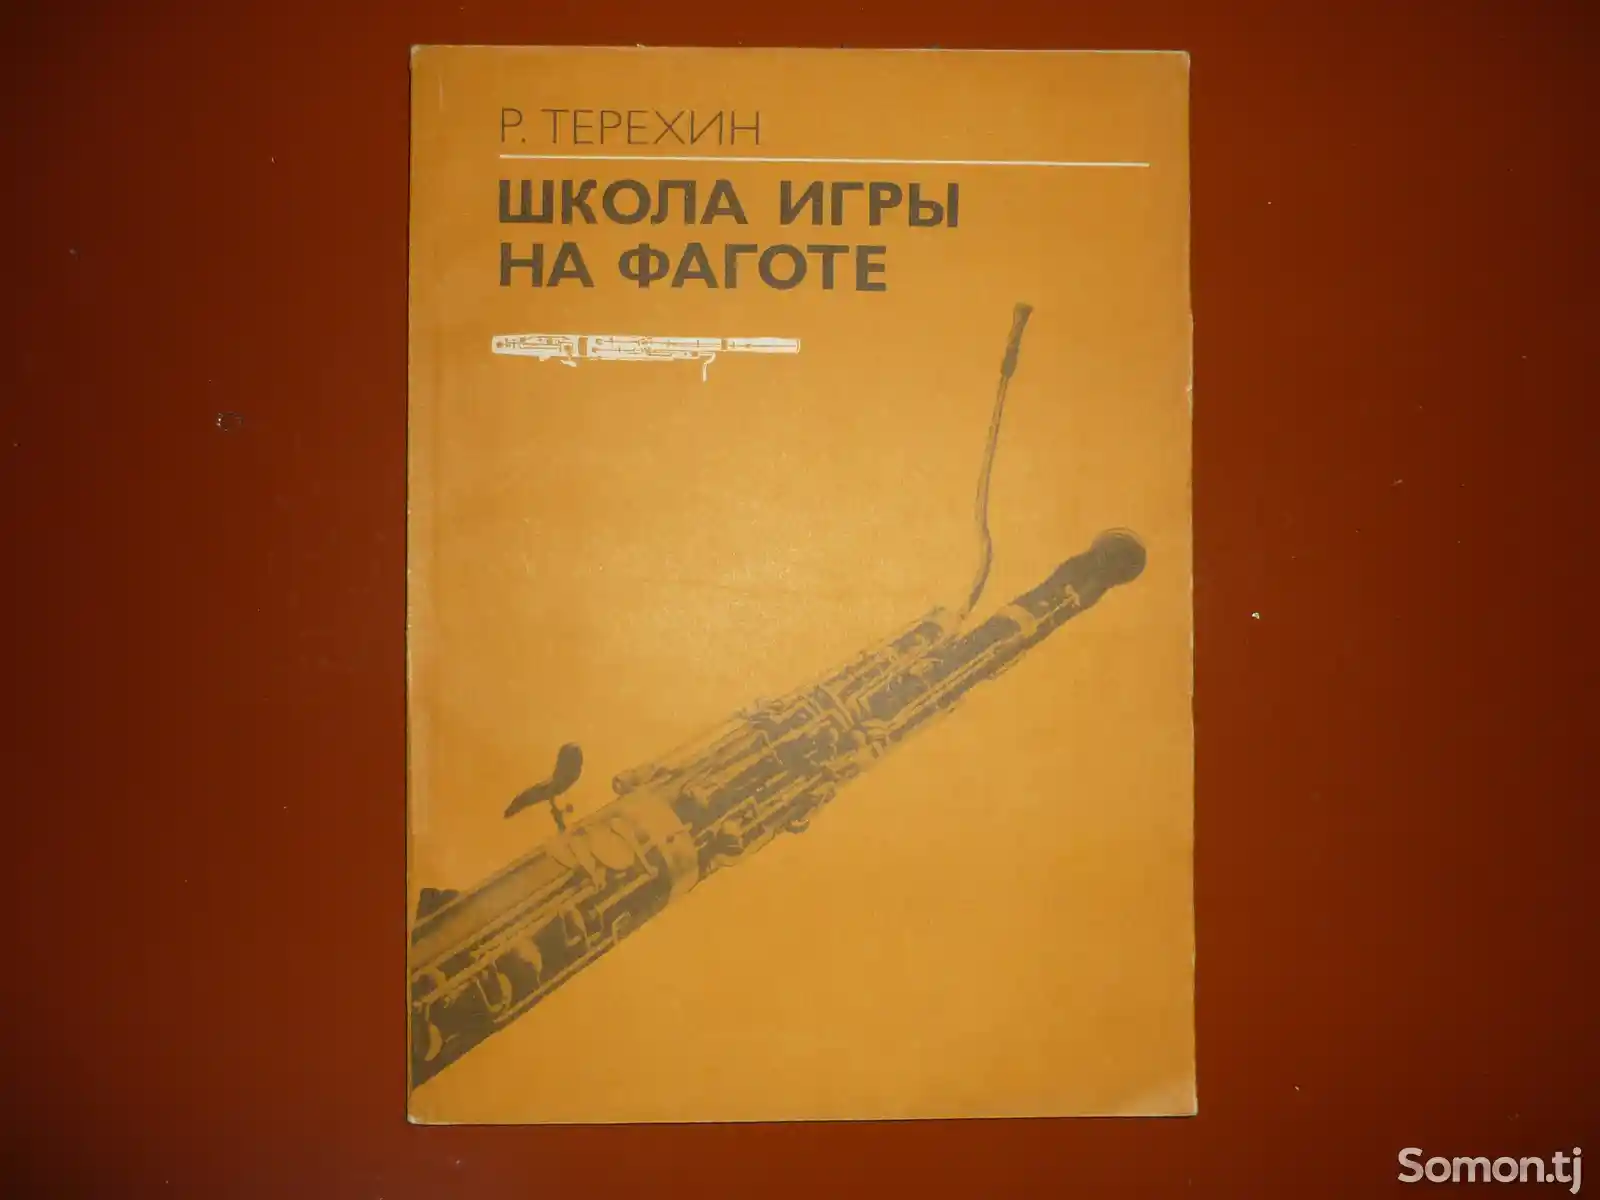 Книга Фагот школа игры Р. Терехин-1